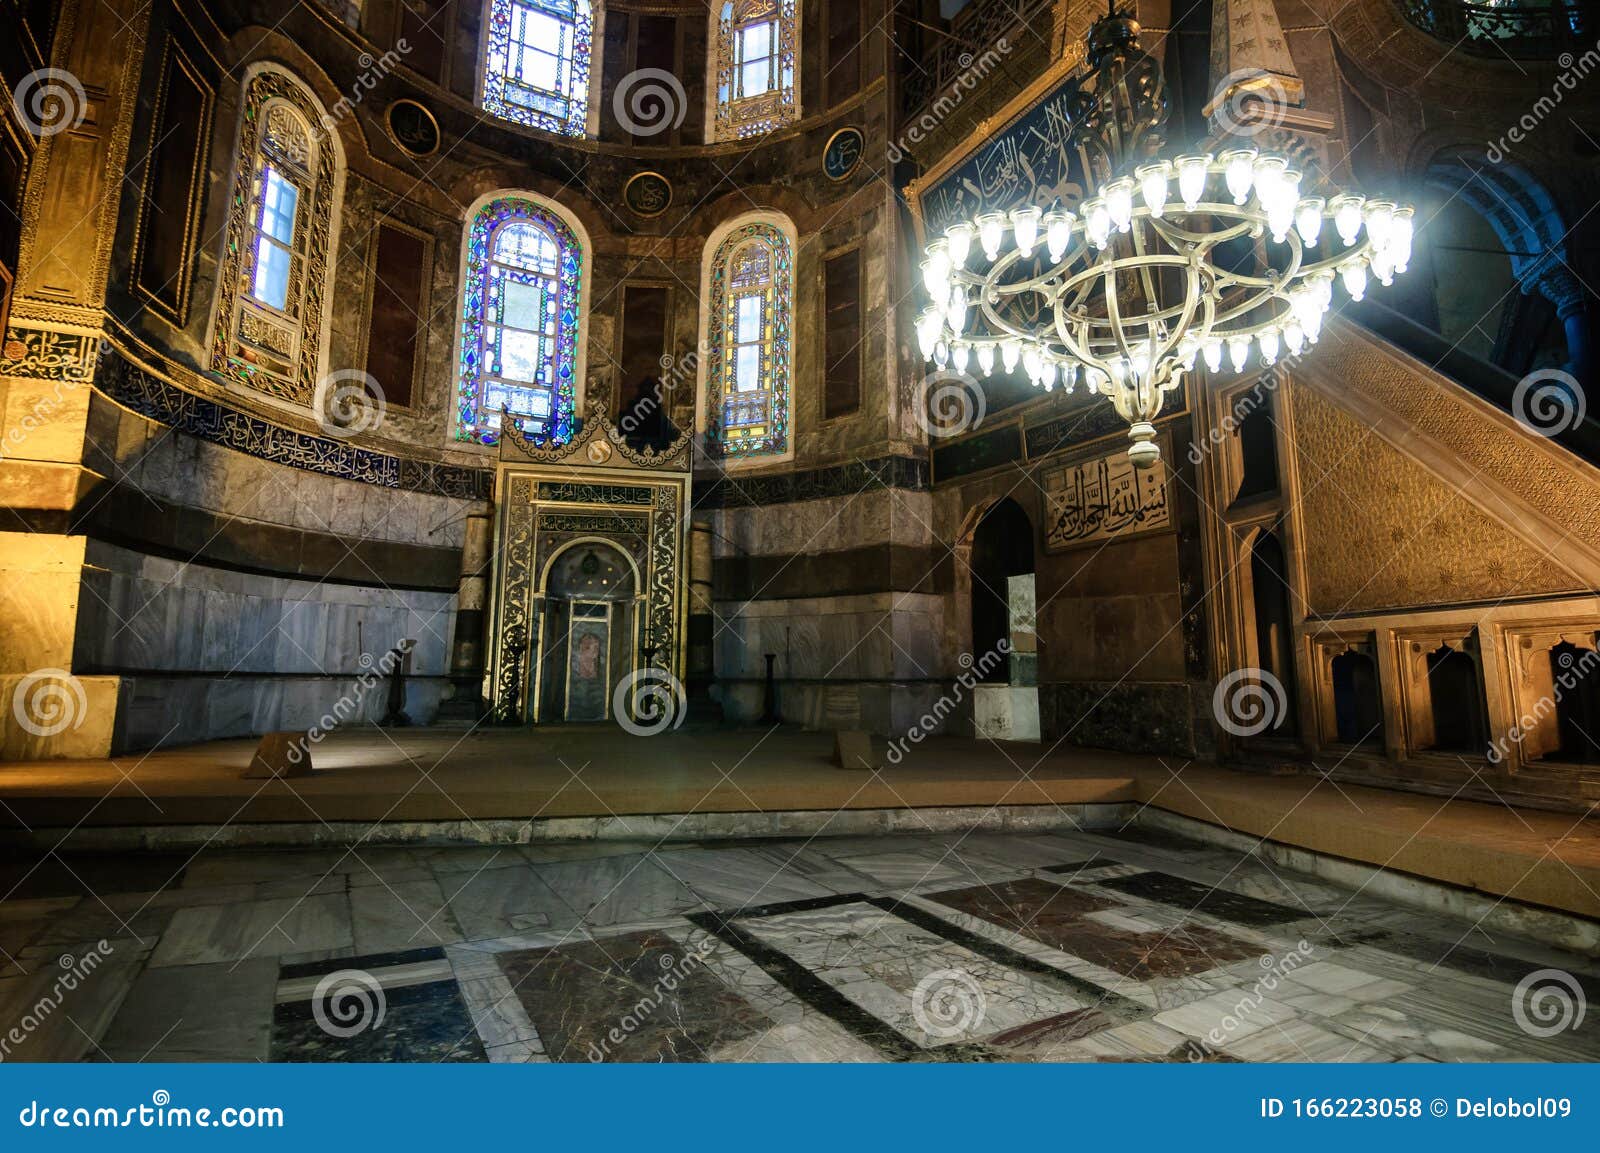 hagia sophia is a former patriarchal orthodox cathedral, turkey.